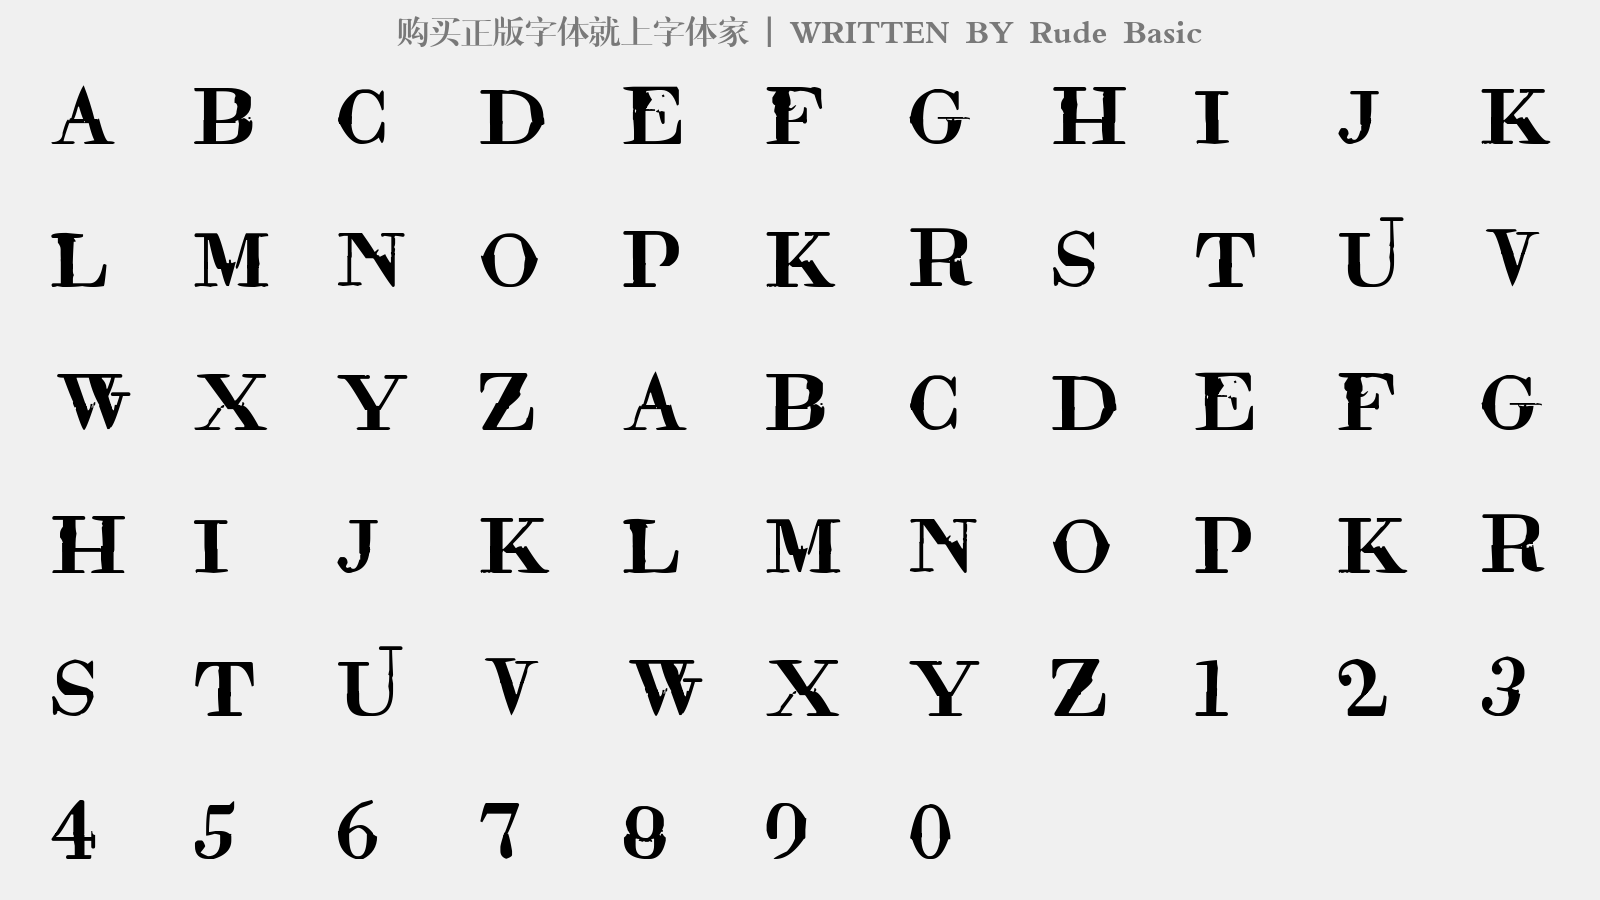 Rude Basic - 大写字母/小写字母/数字